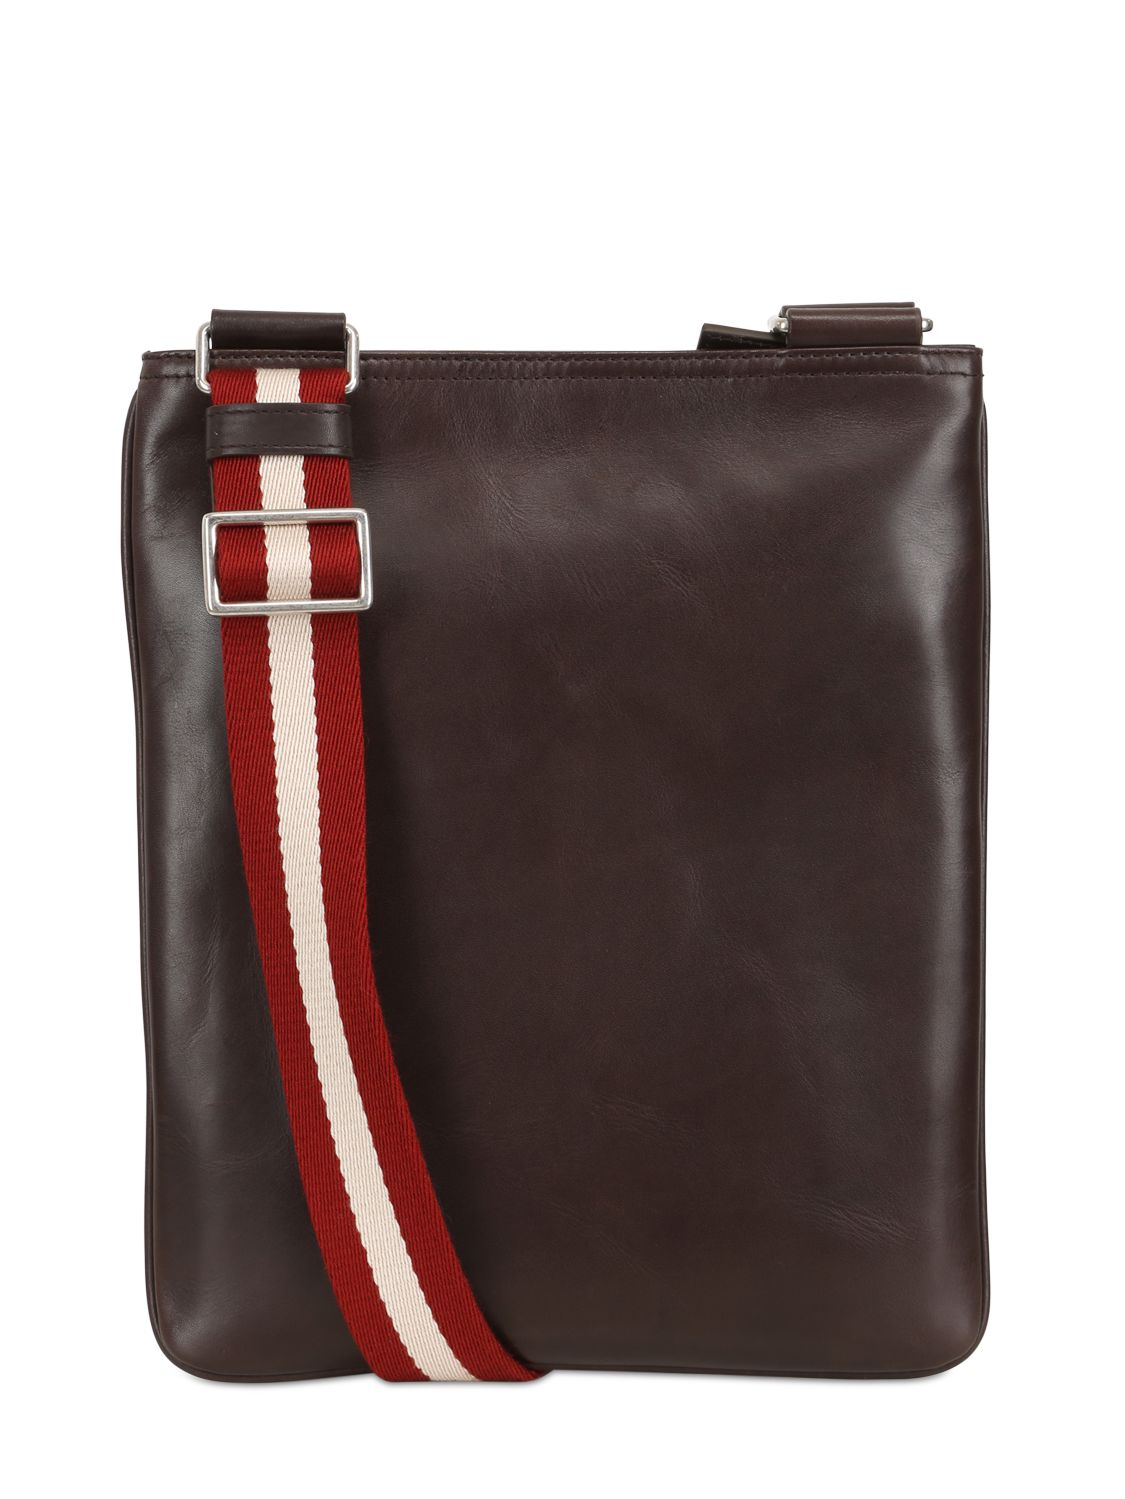 Bally Leather Crossbody Bag in Brown for Men (DARK BROWN) | Lyst